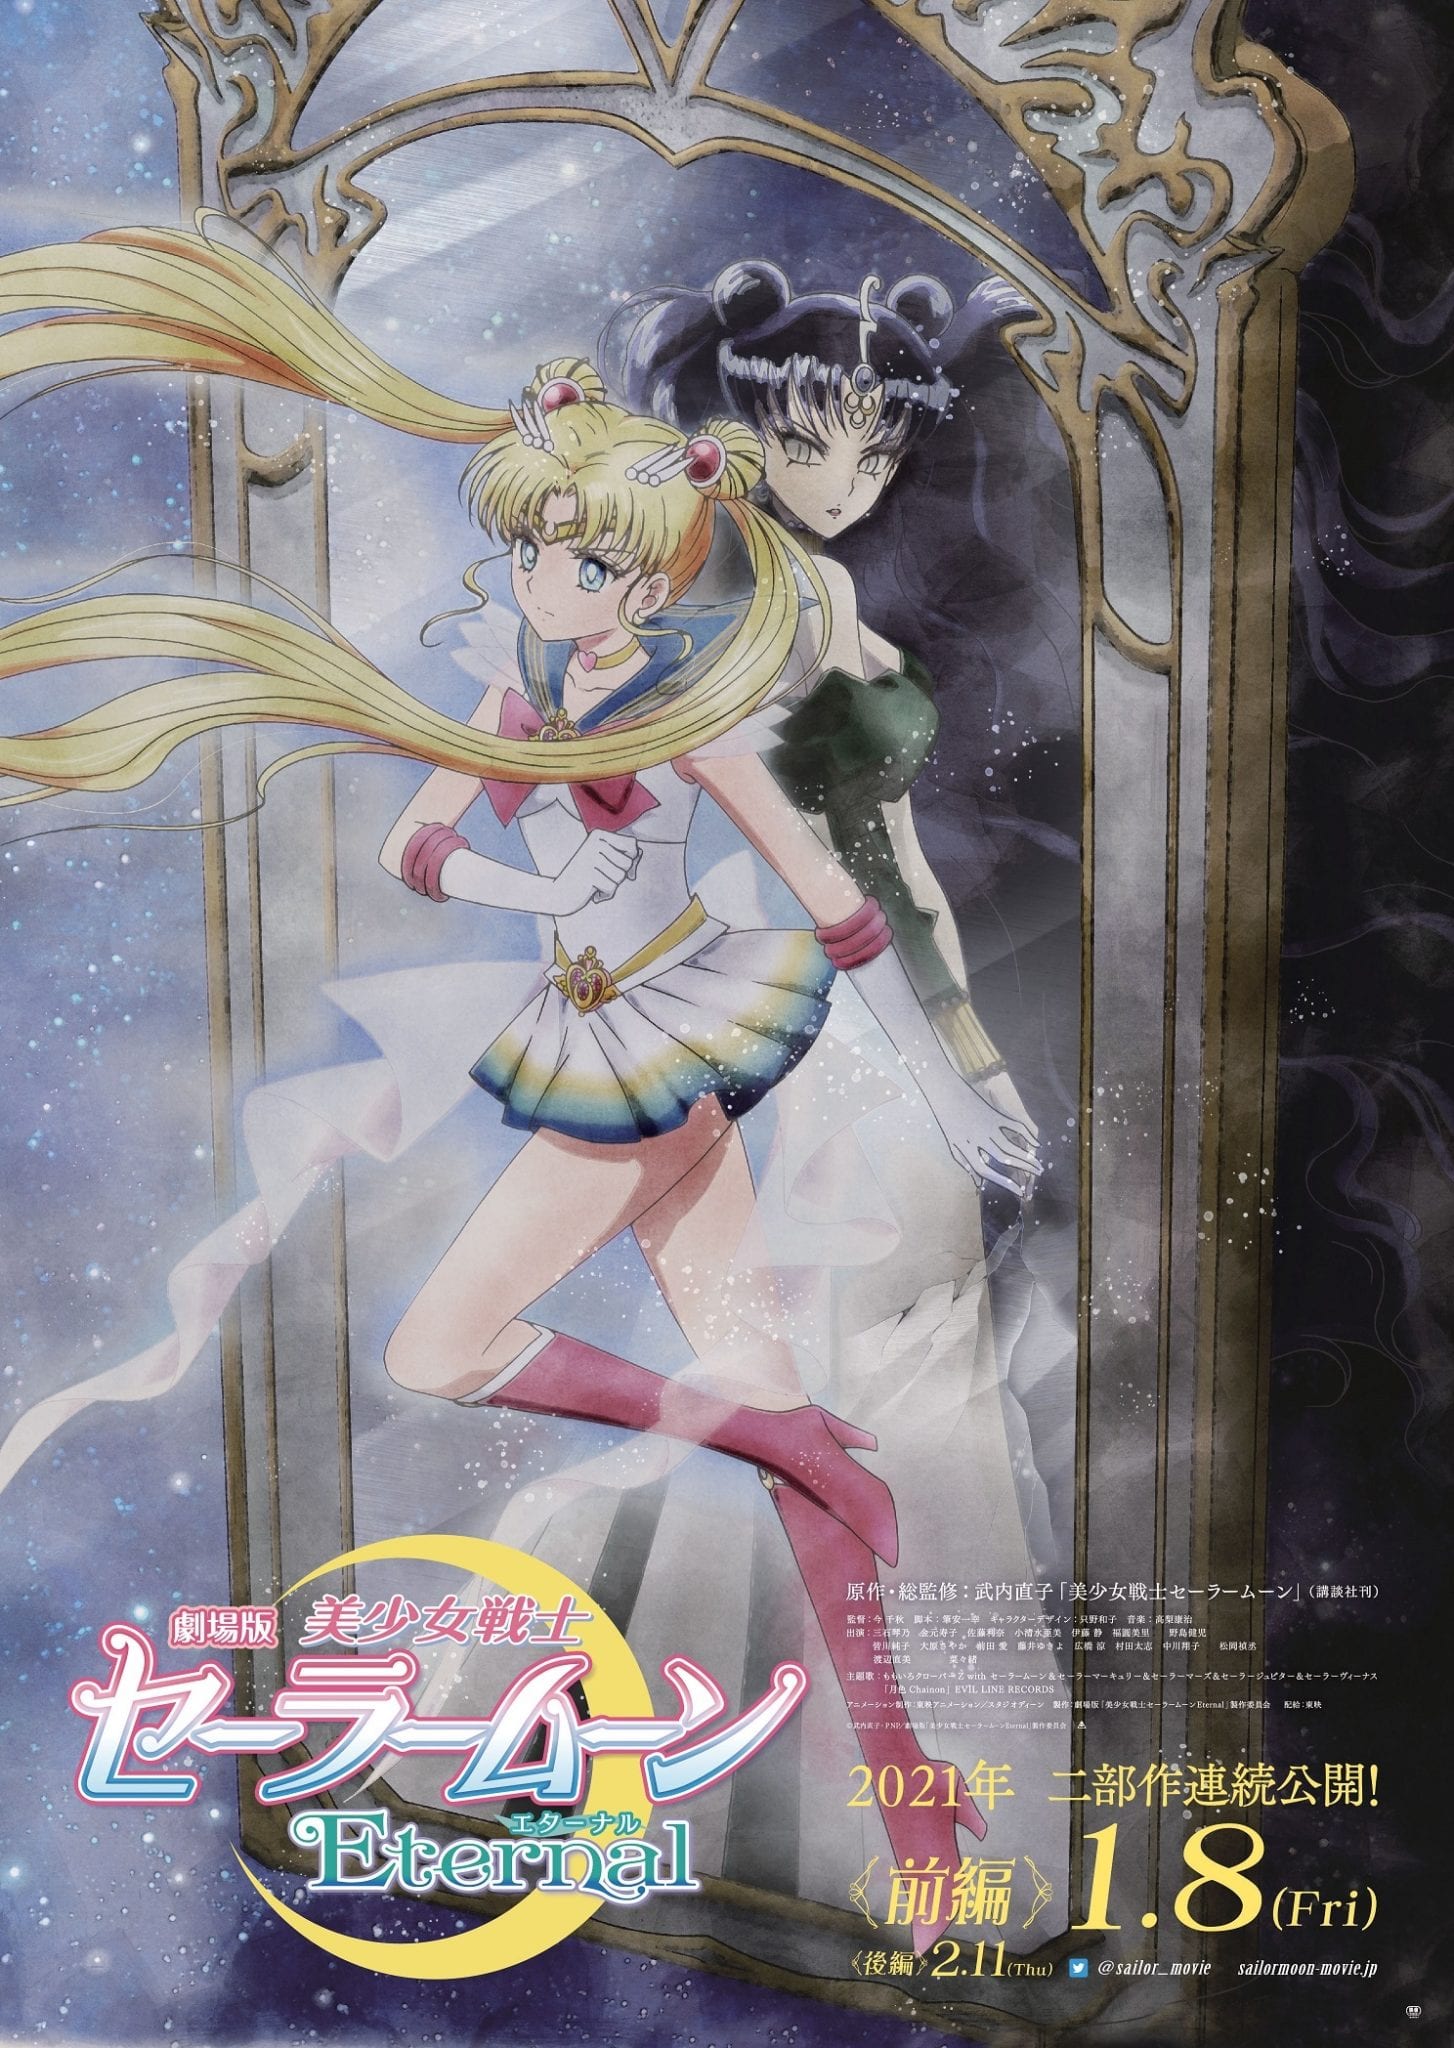 Sailor Moon Eternal revela nueva imagen previa a su estreno Tadaima